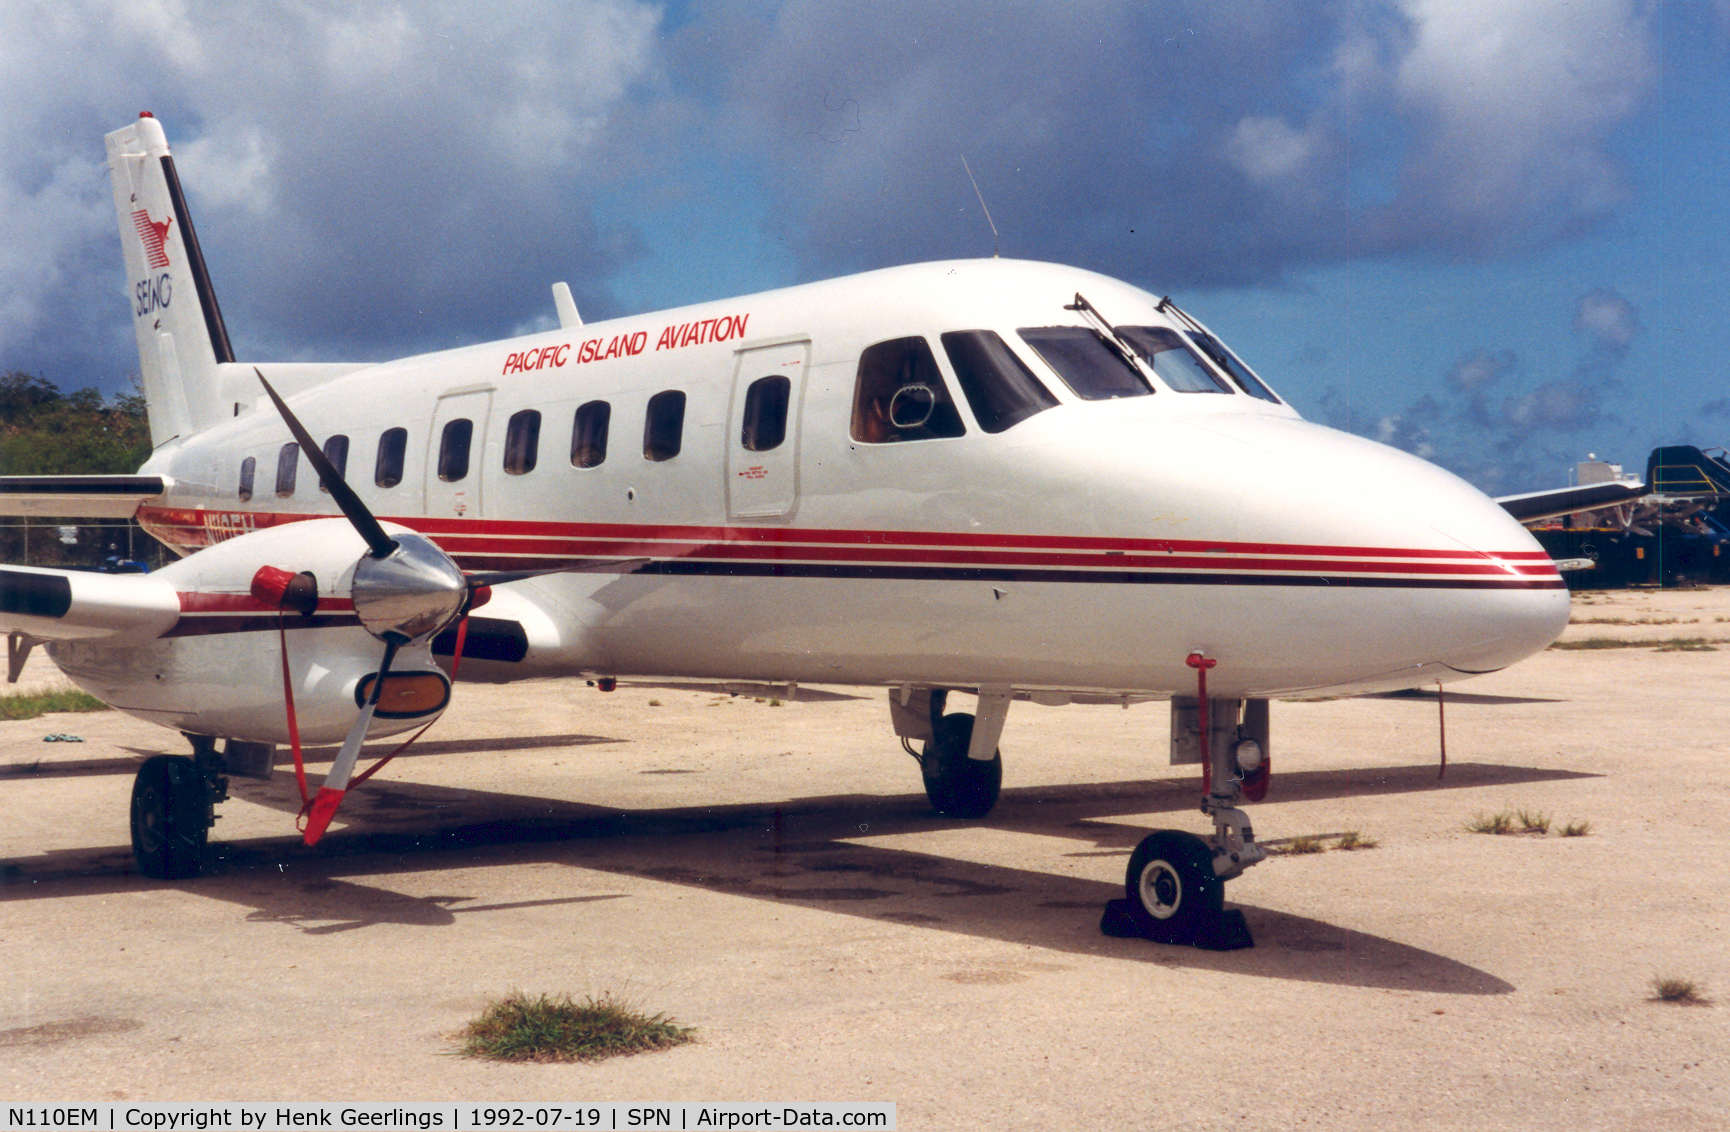 N110EM, 1982 Embraer EMB-110P1 Bandeirante C/N 110.426, Pacific Island Aviation , Saipan , 19 jul '92